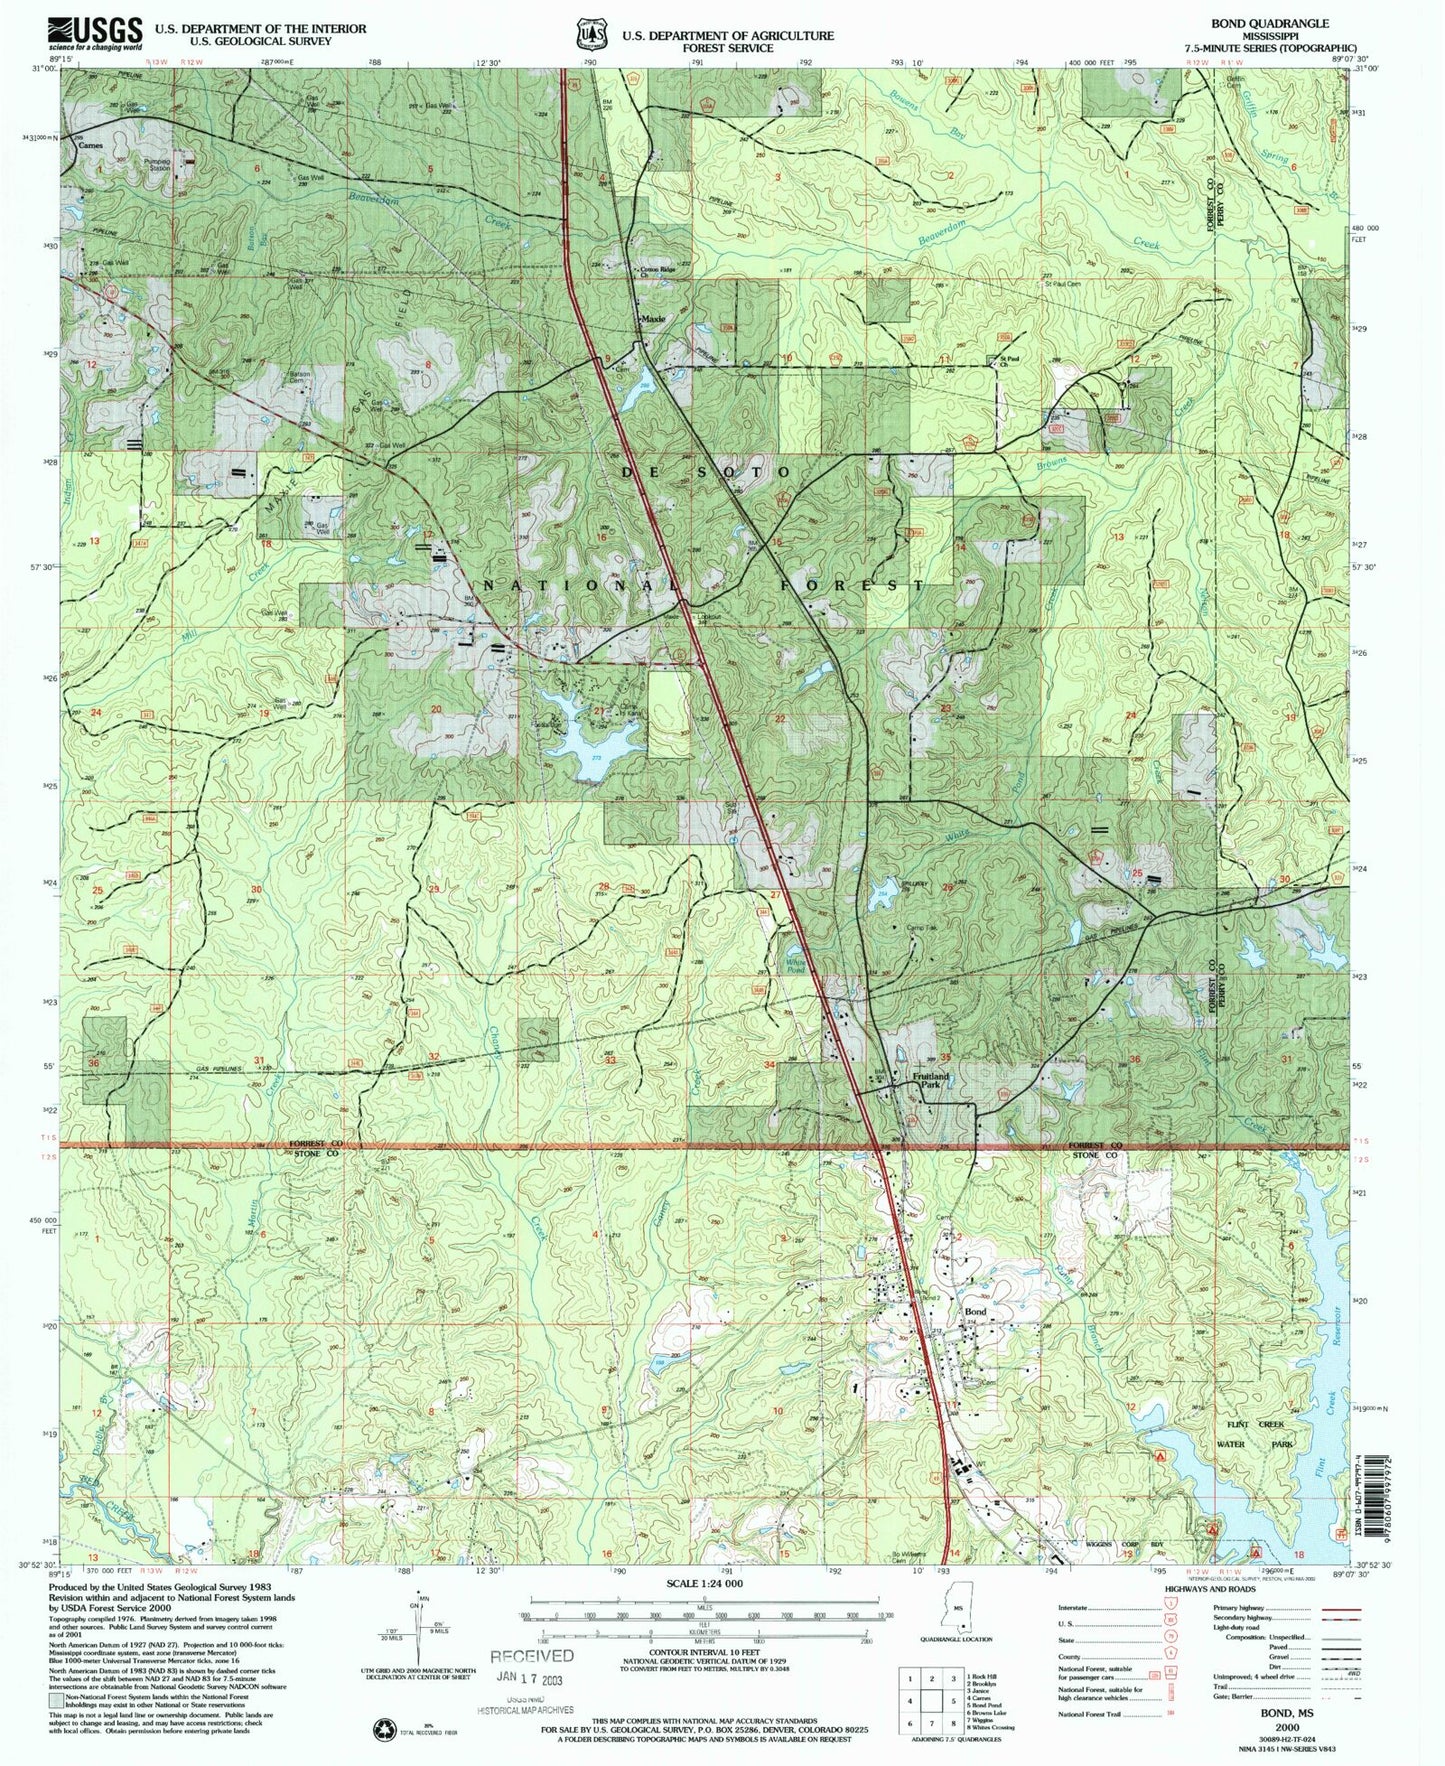 Classic USGS Bond Mississippi 7.5'x7.5' Topo Map Image